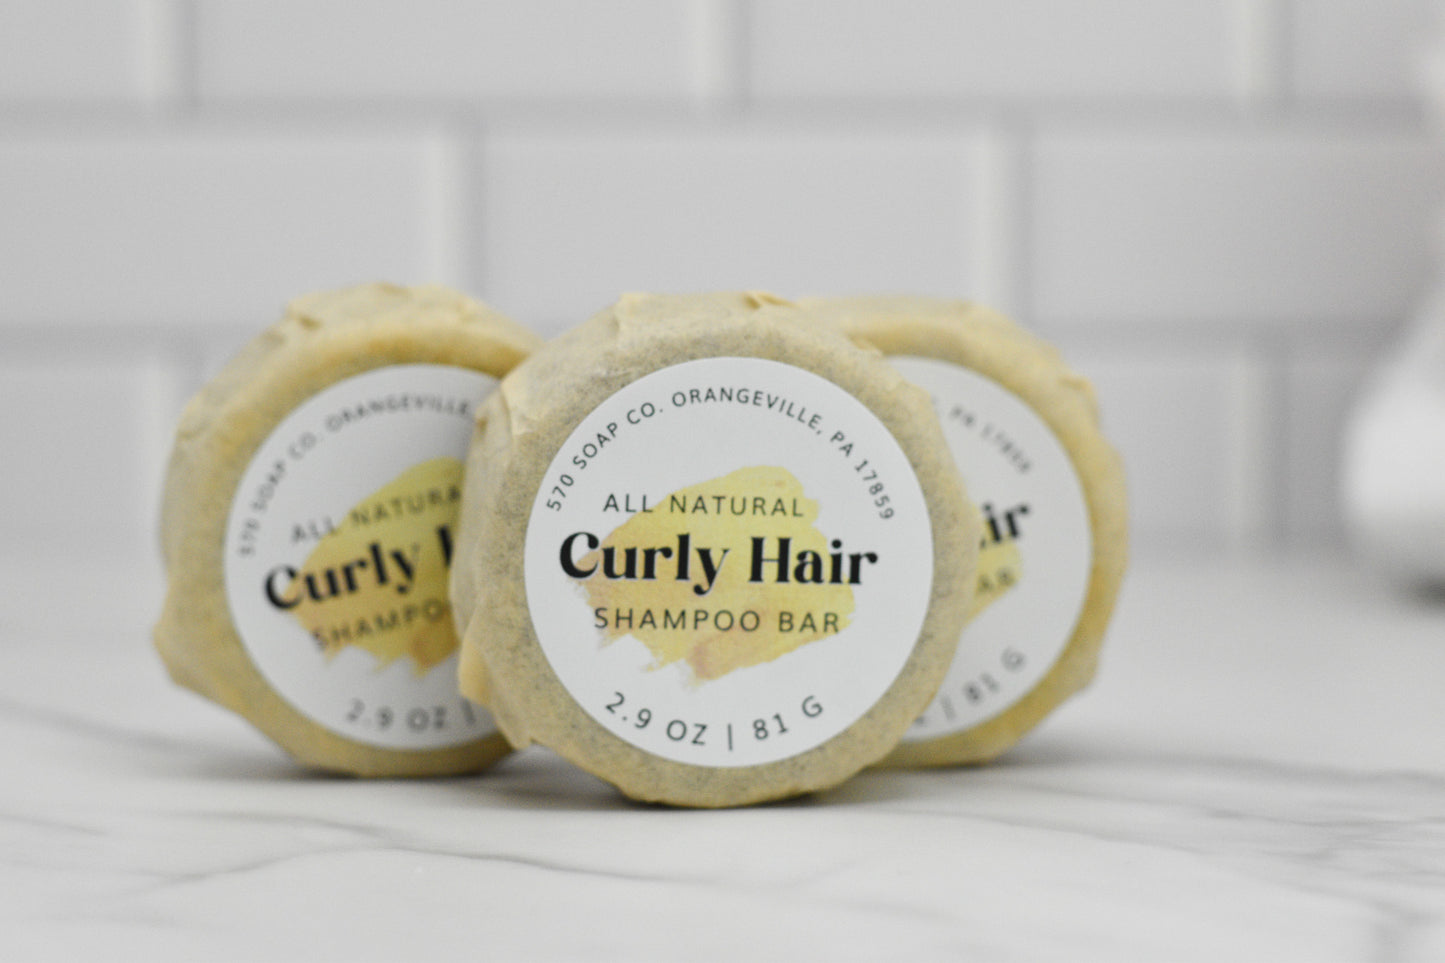 Curly Hair Shampoo Bar - All Natural